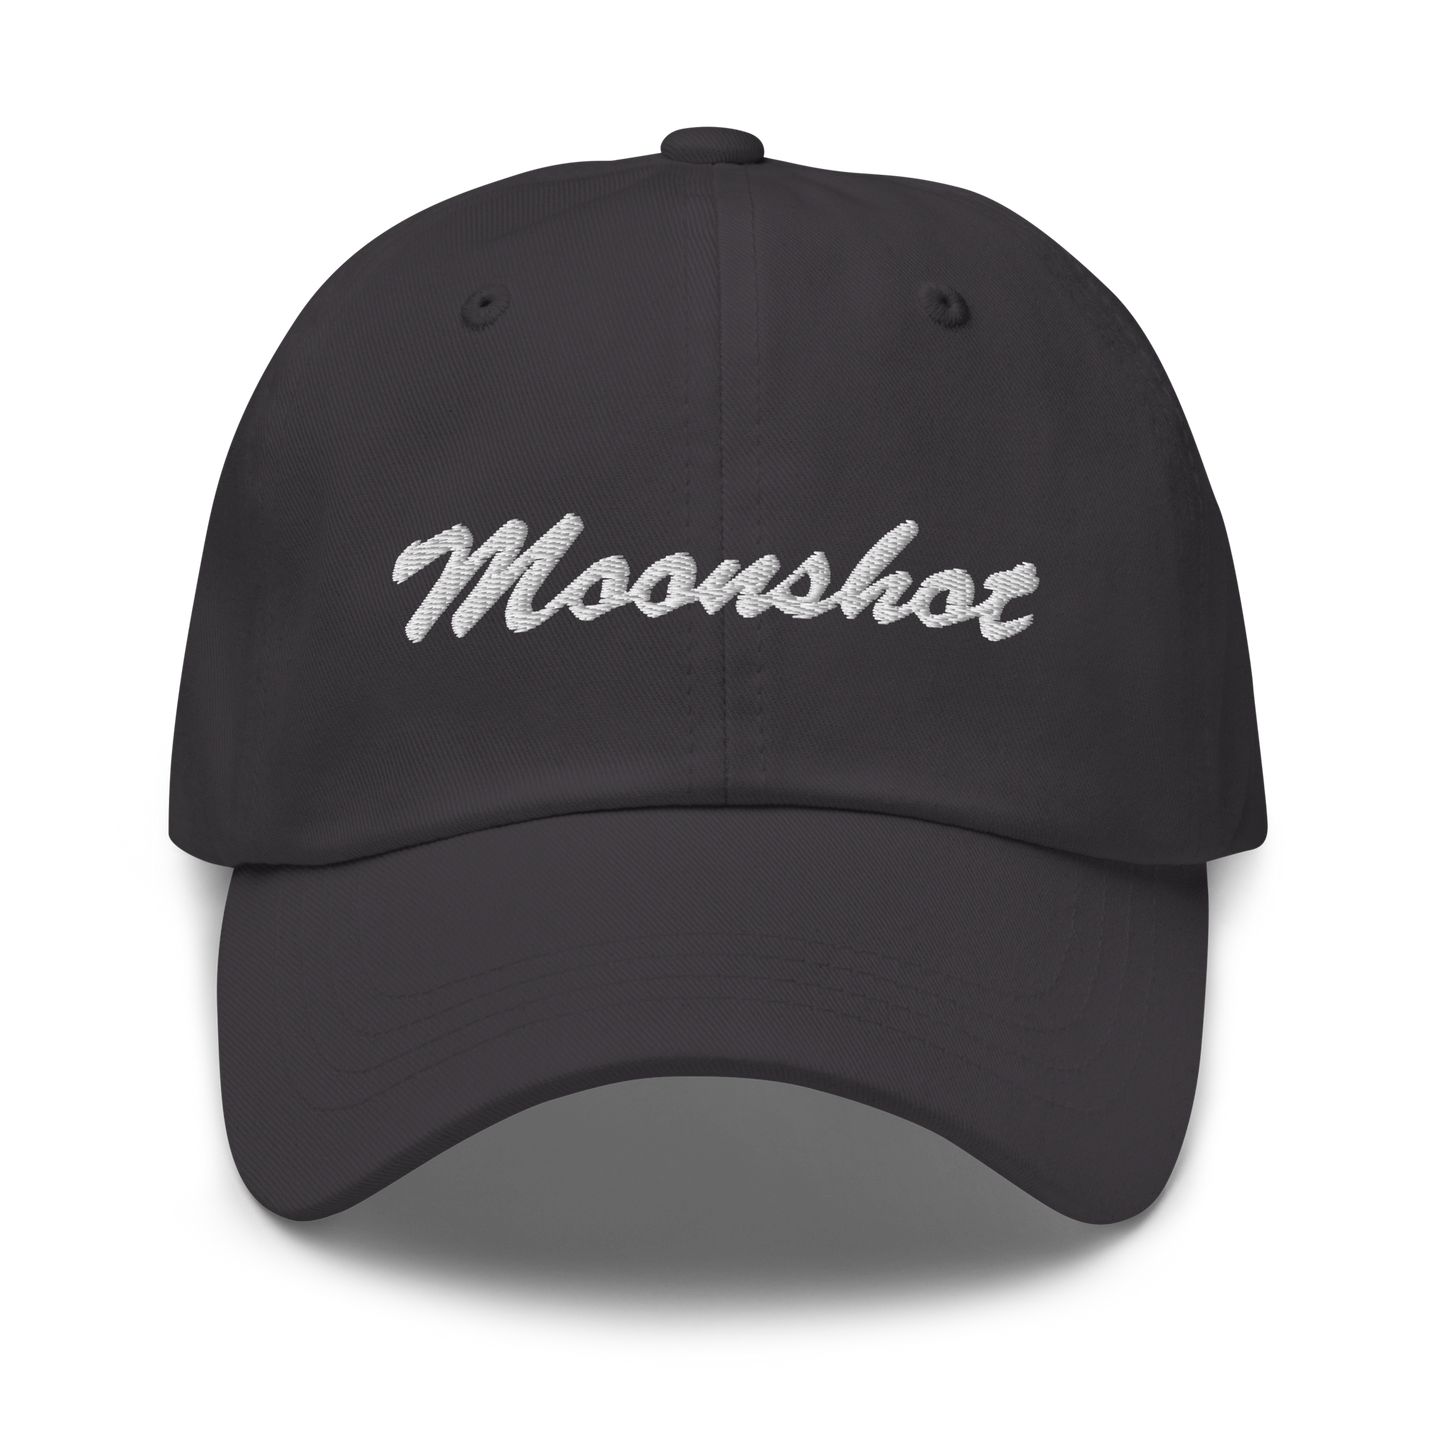 Moonshot Dad Hat